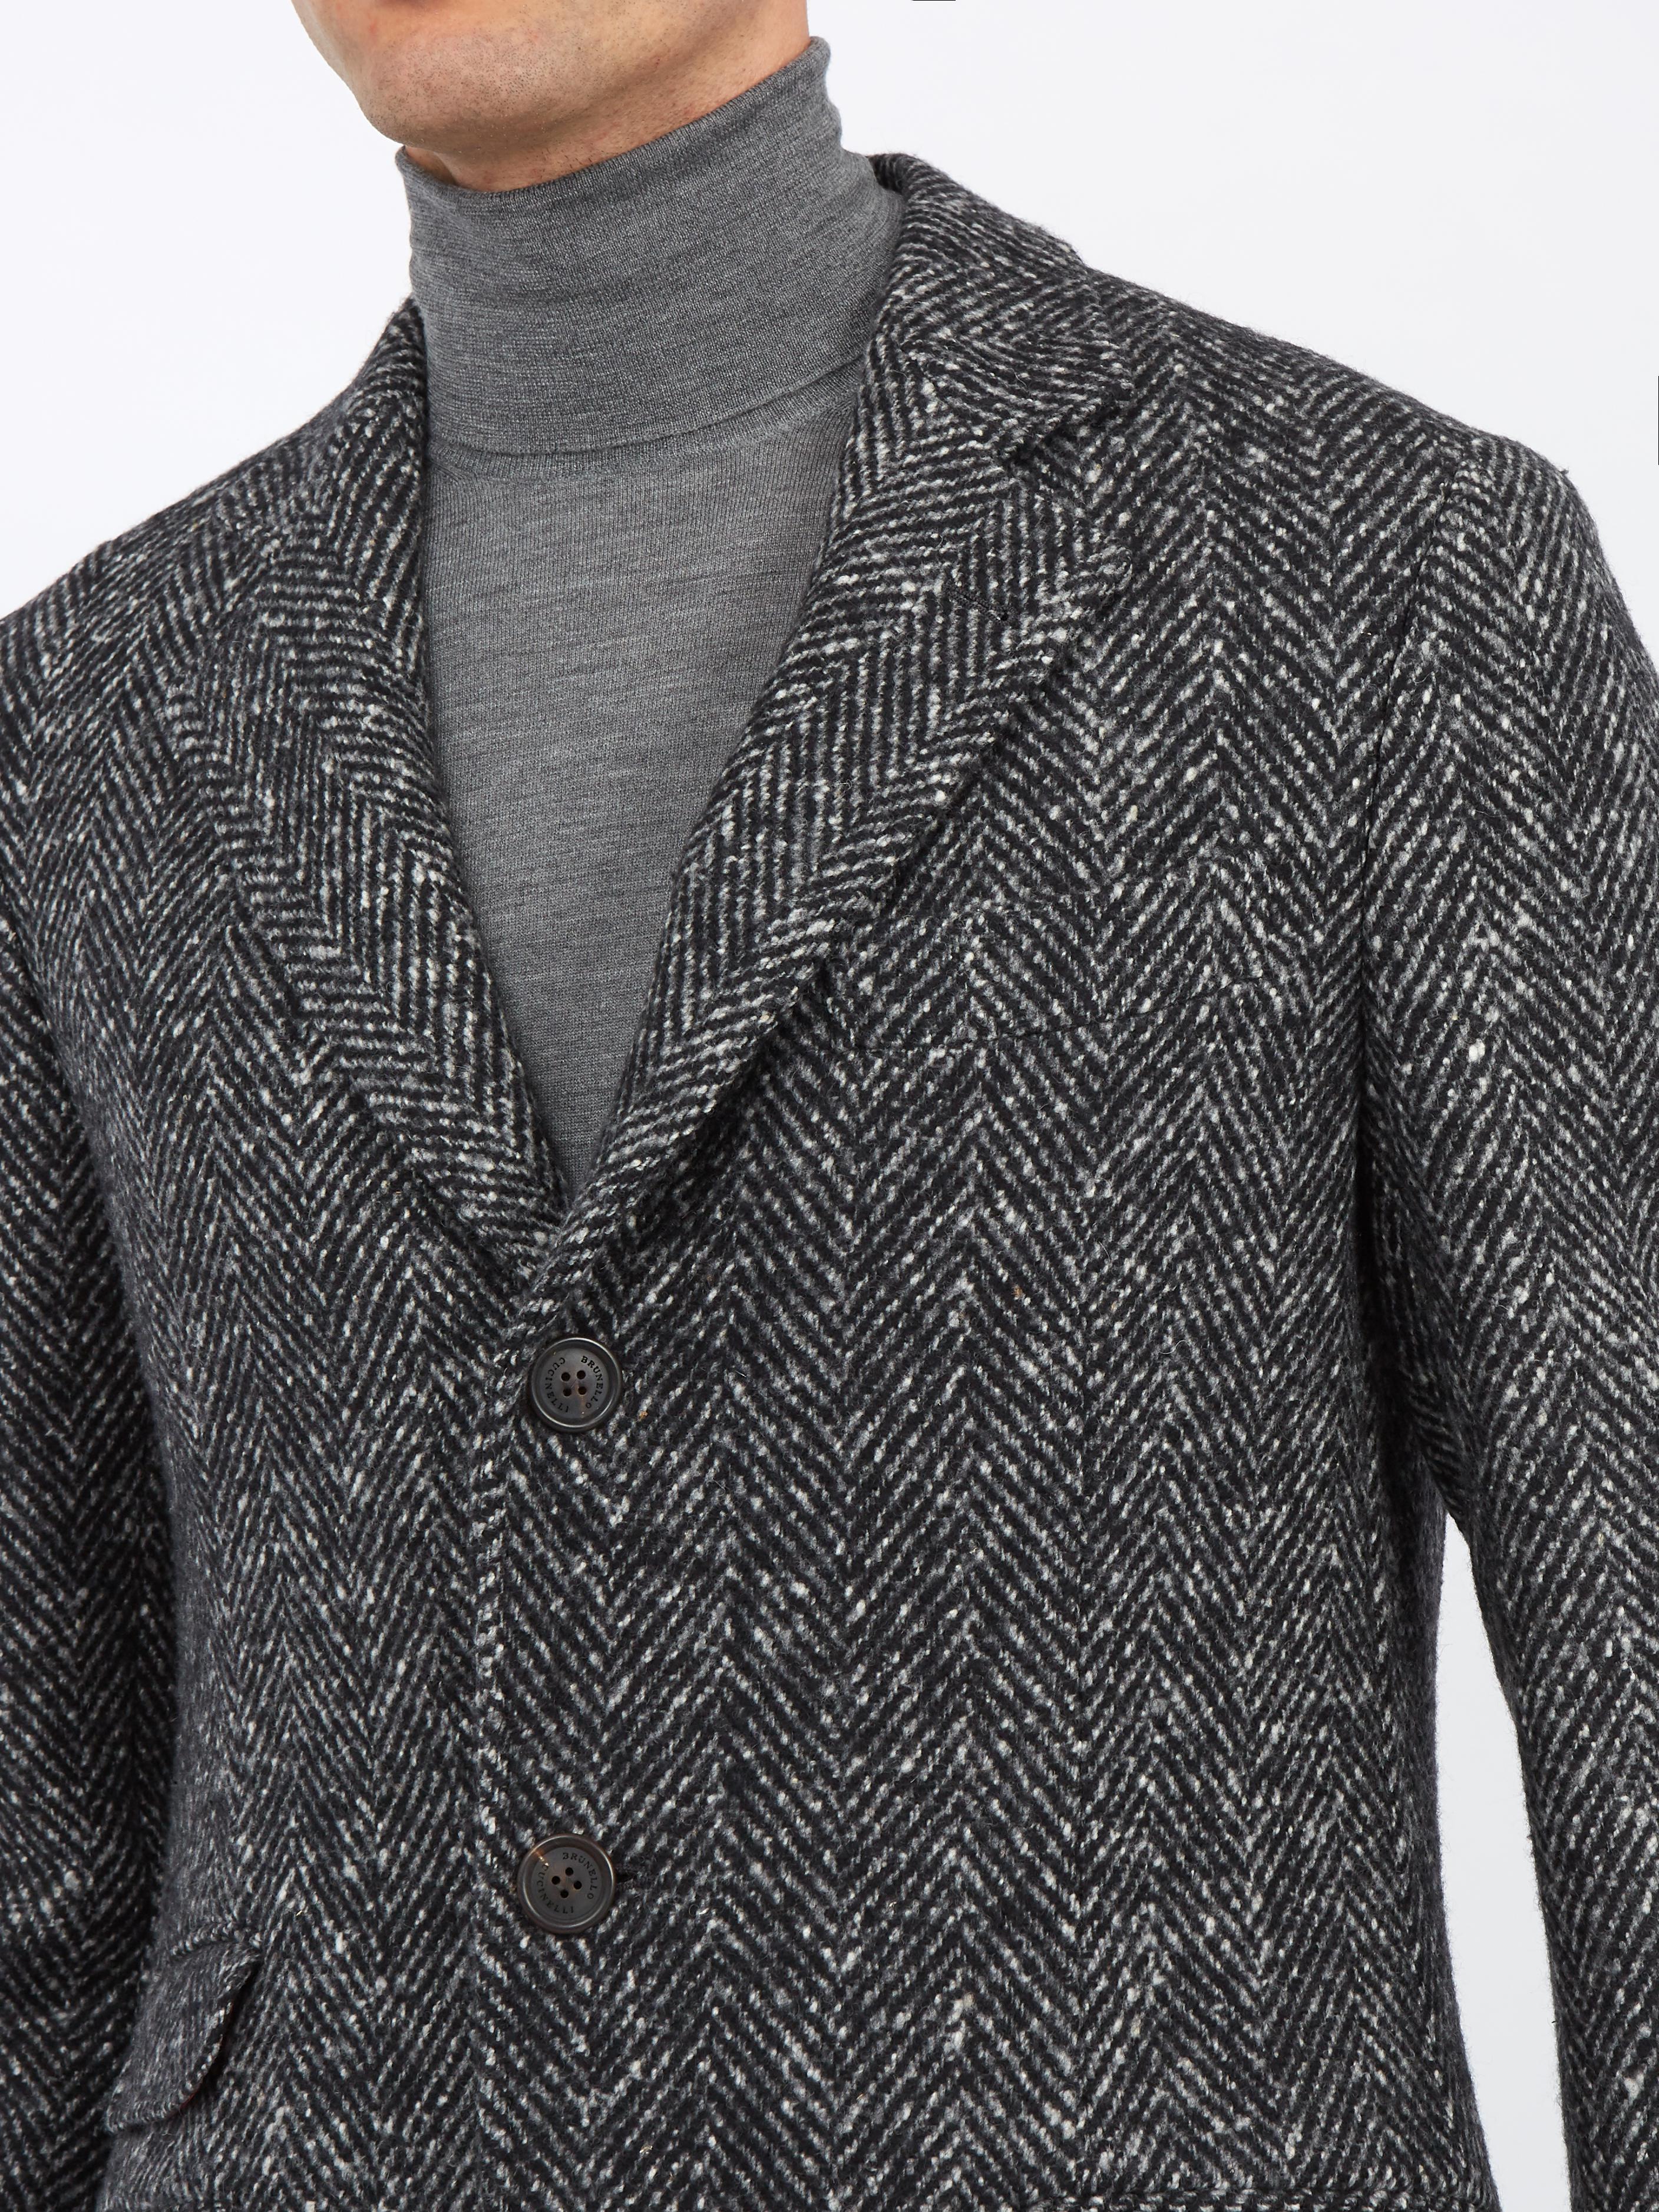 Brunello Cucinelli Herringbone-tweed Wool And Cashmere Coat for Men - Lyst